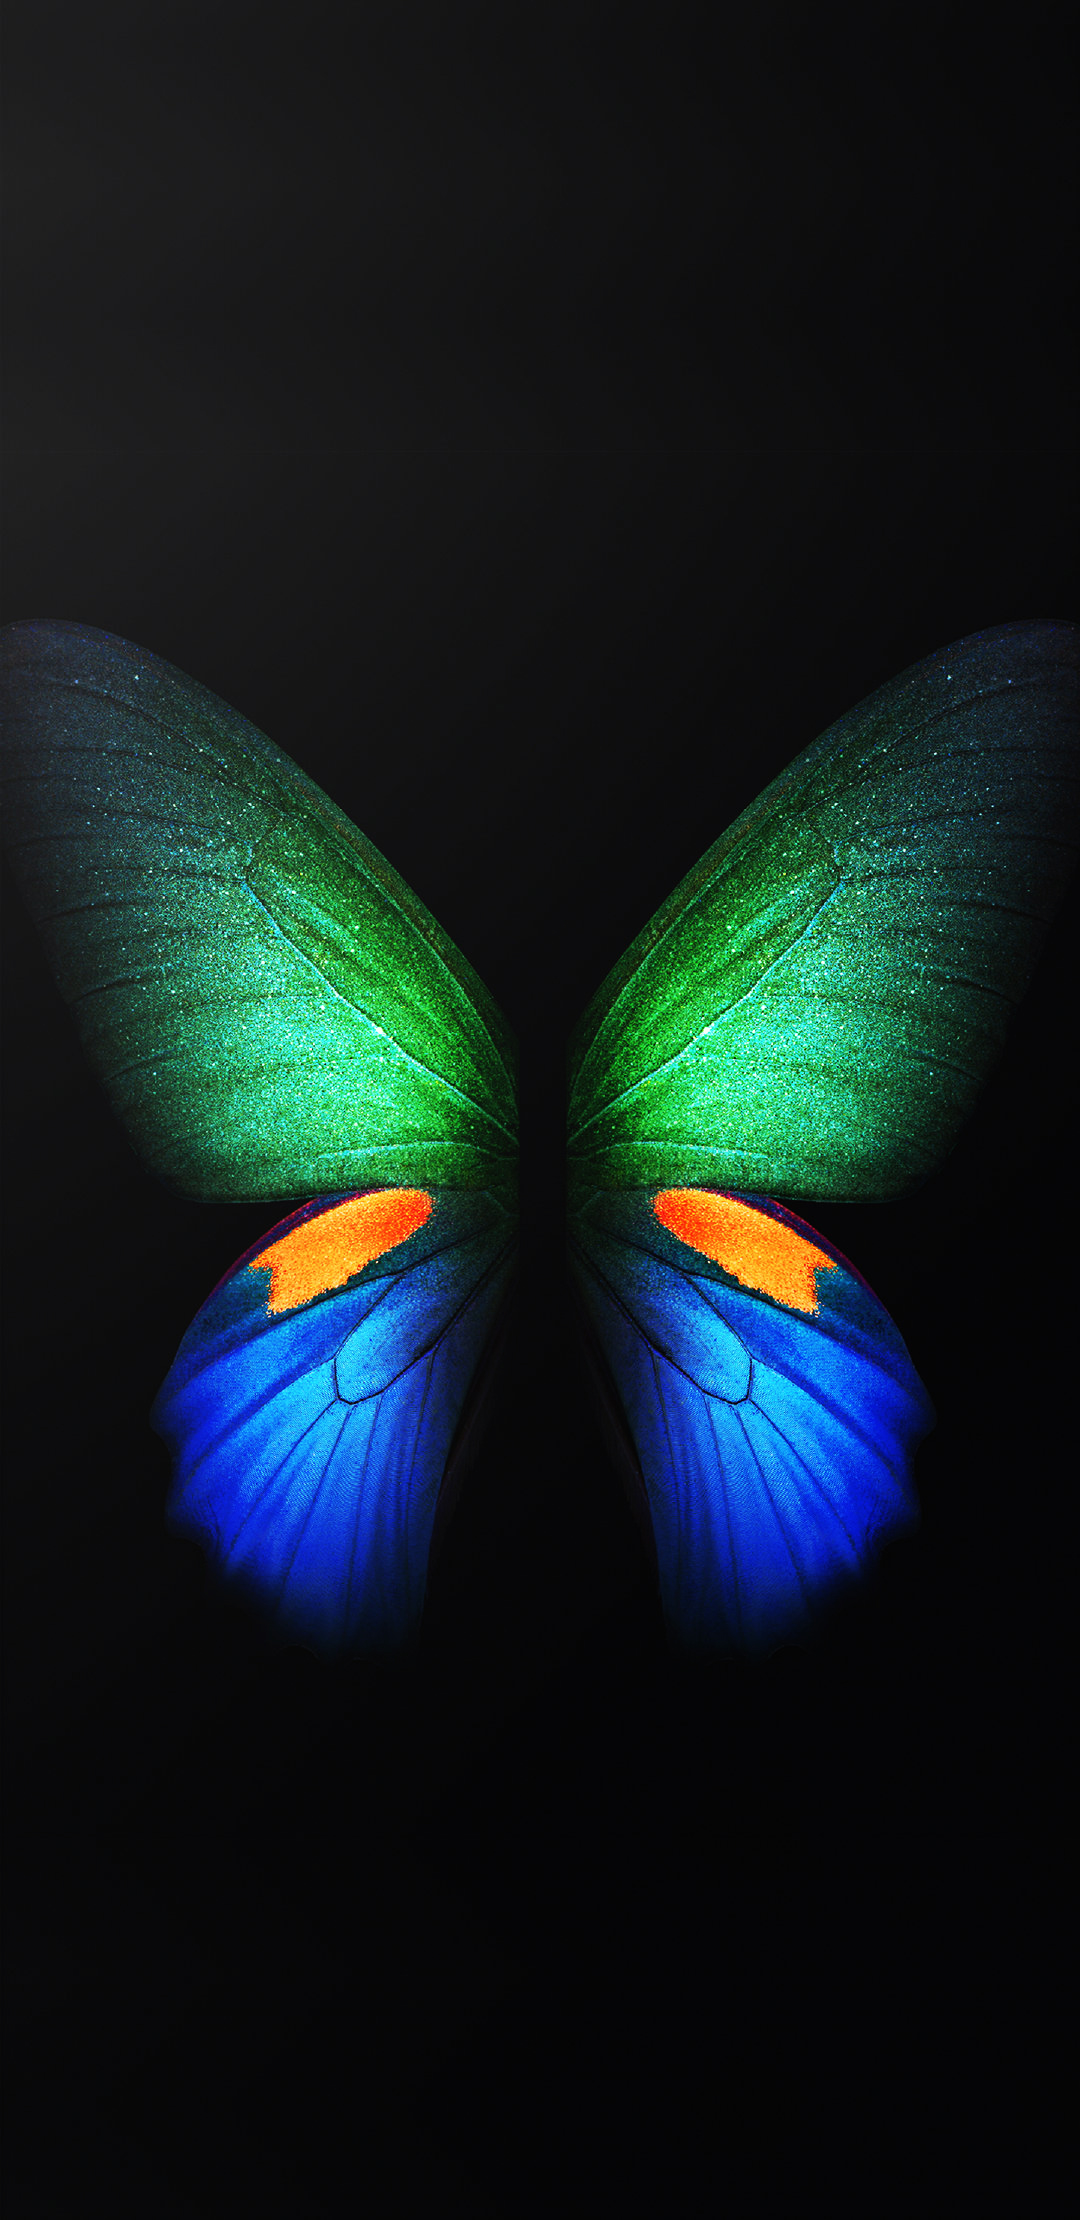 fonds d'écran samsung stock,papillon,insecte,bleu,vert,papillons et papillons